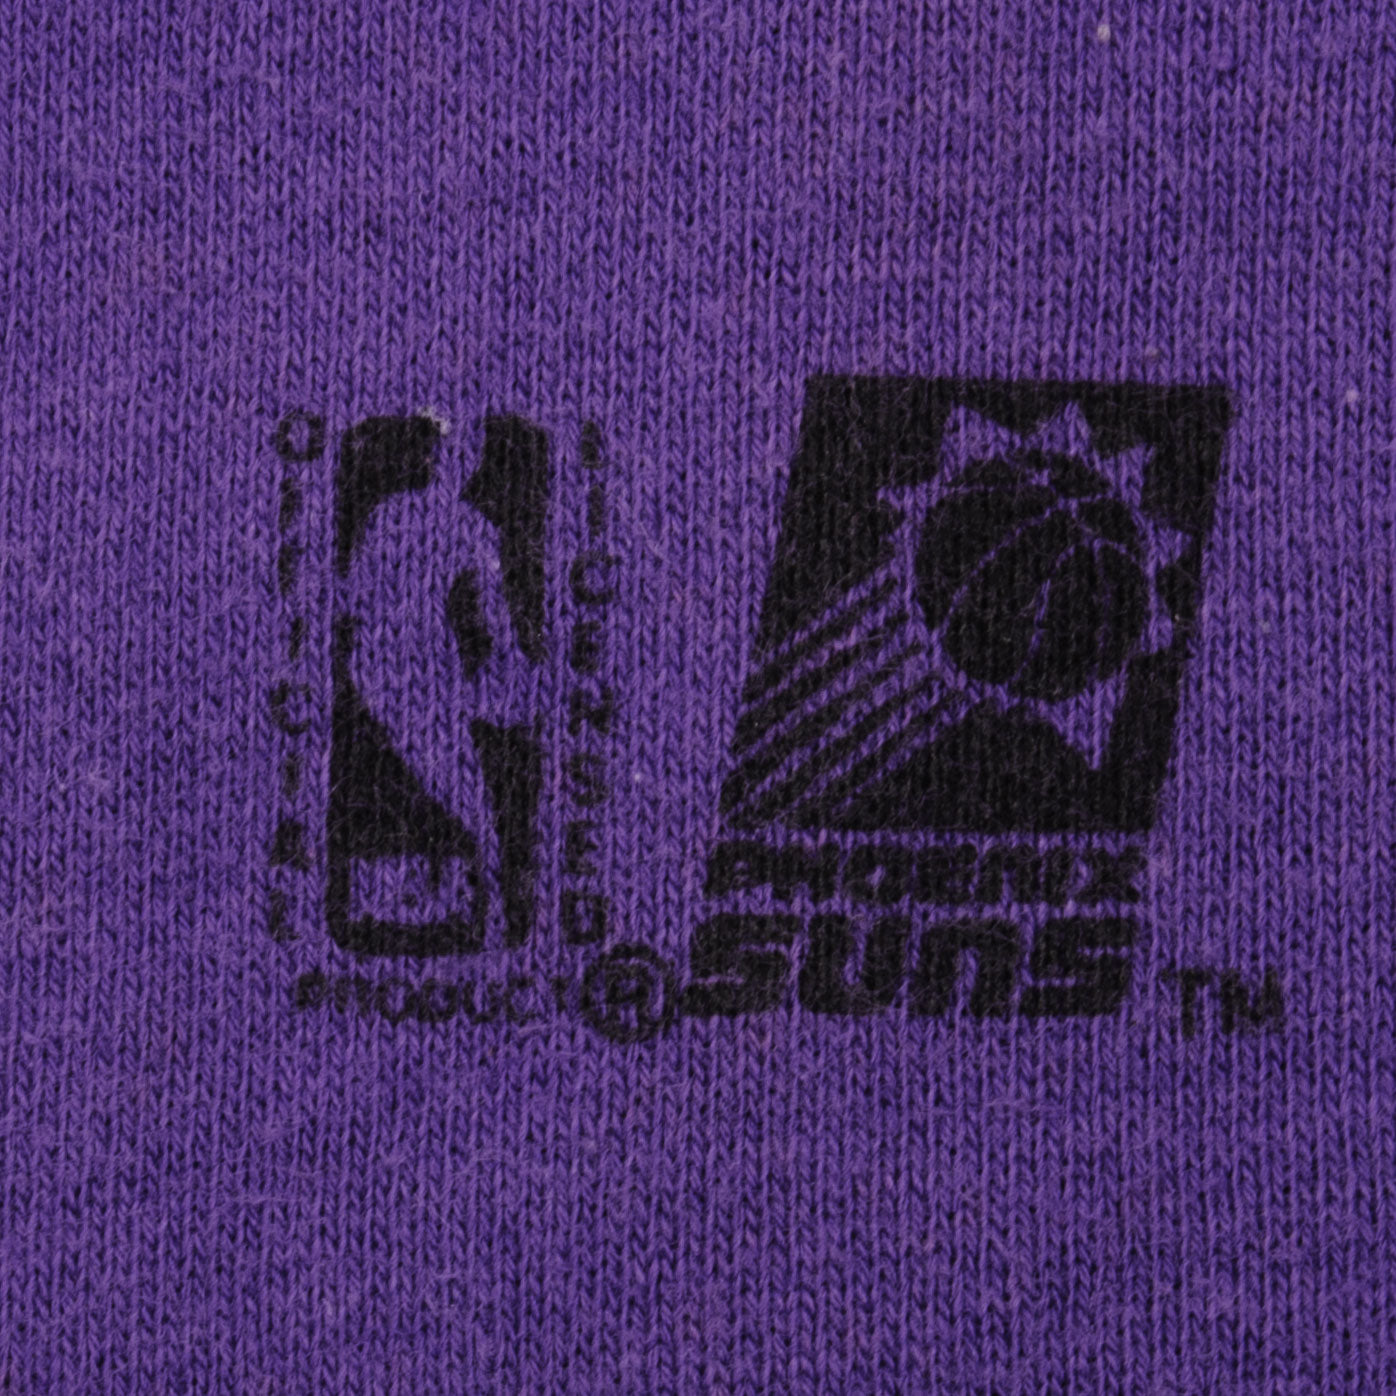 Vintage NBA Phoenix Suns Sweatshirt Size 2XL Made in USA